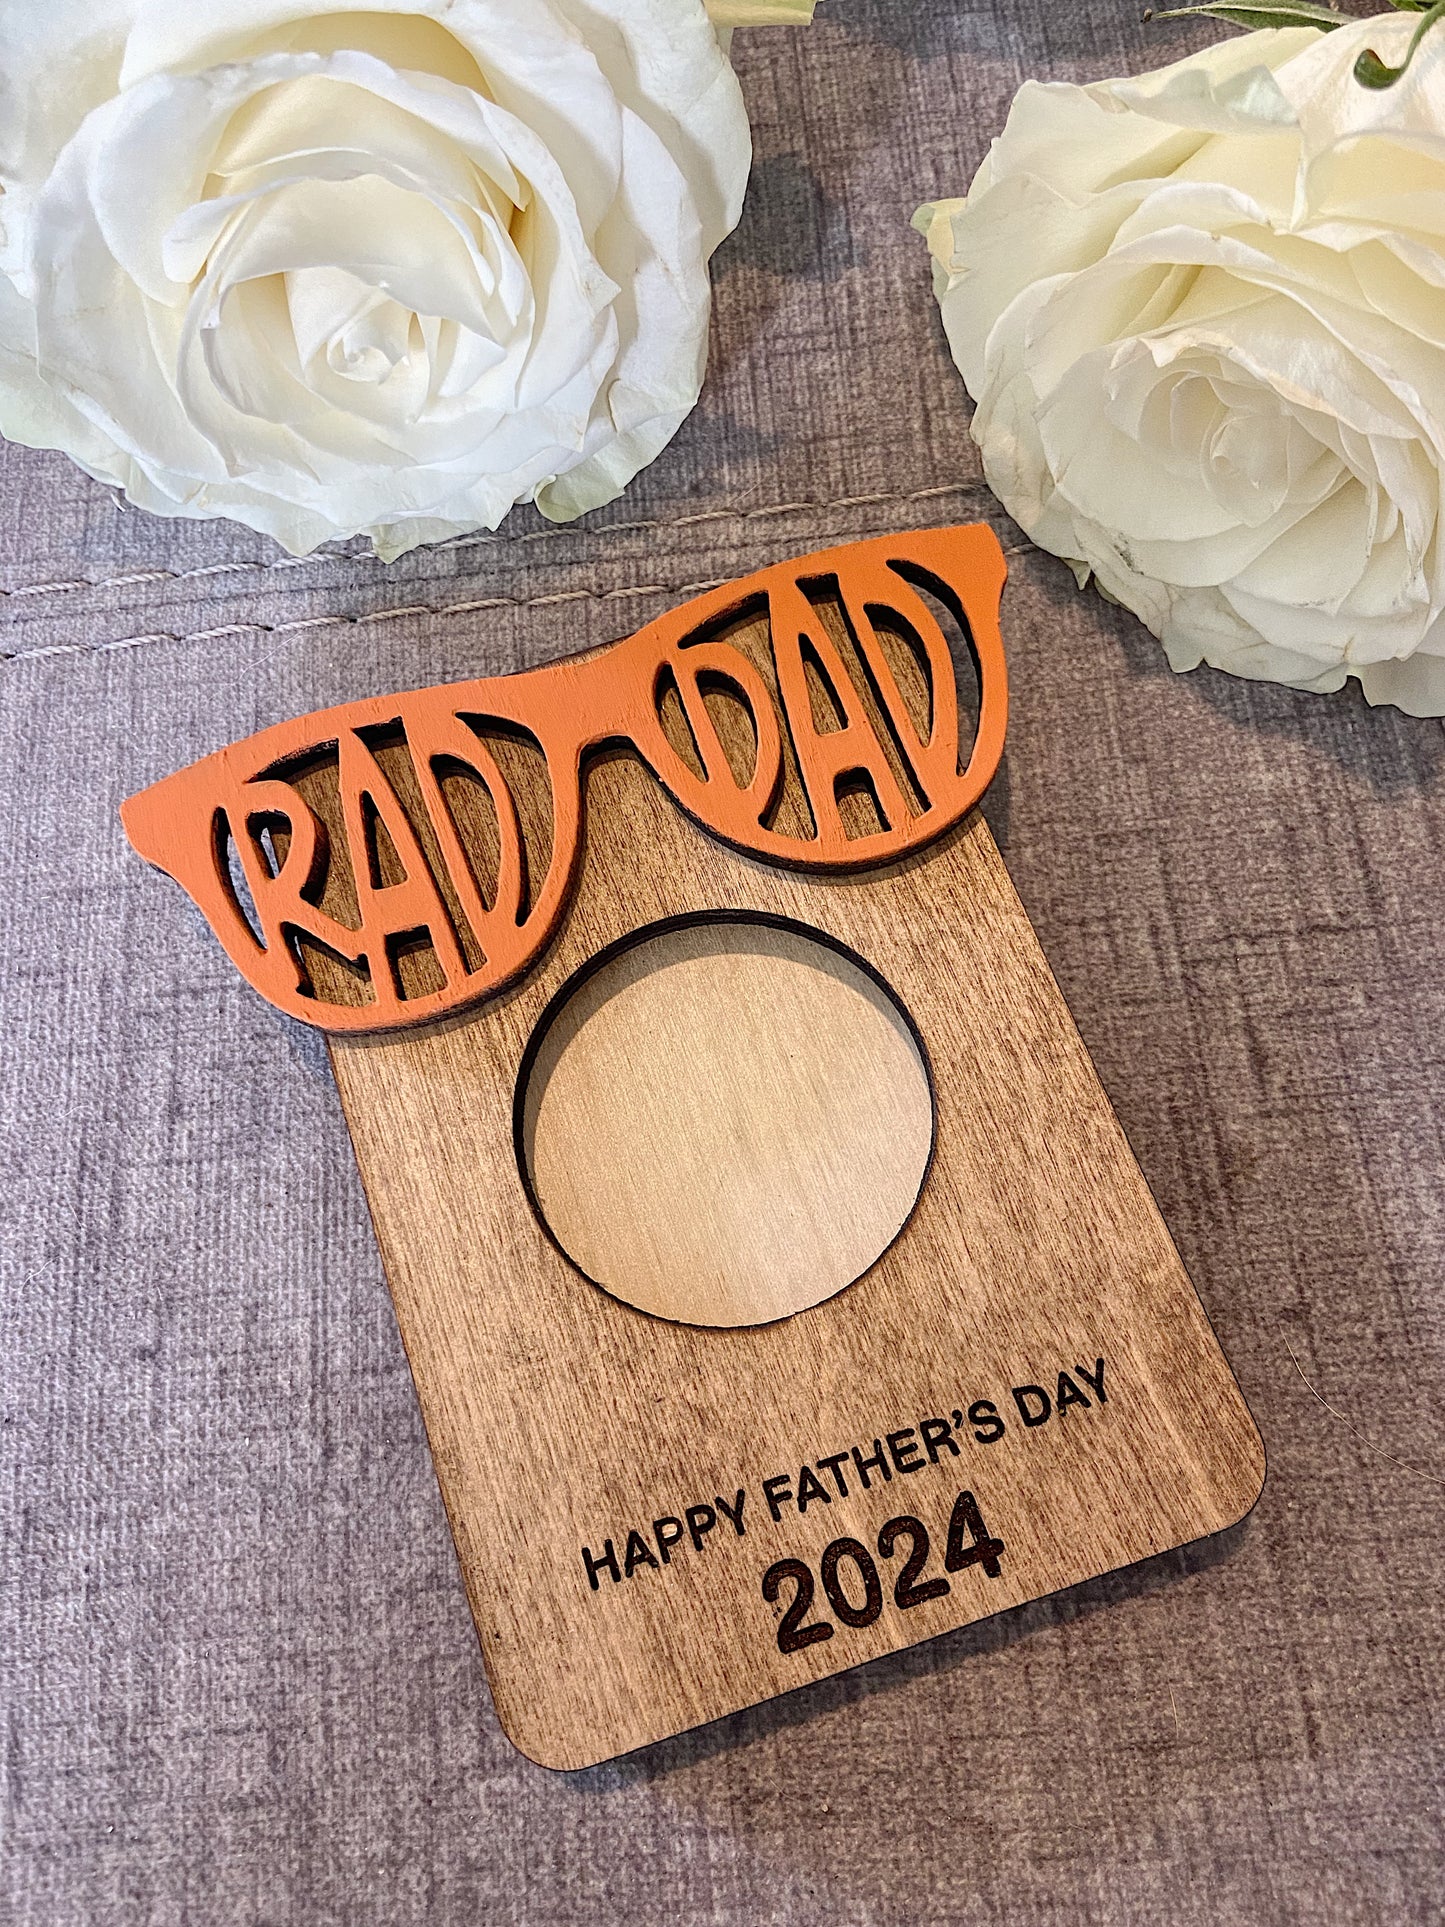 Rad Dad- Sun Visor Picture Frame or Fridge Magnet - Dad, Step-Dad, Grandpa, Pawpaw